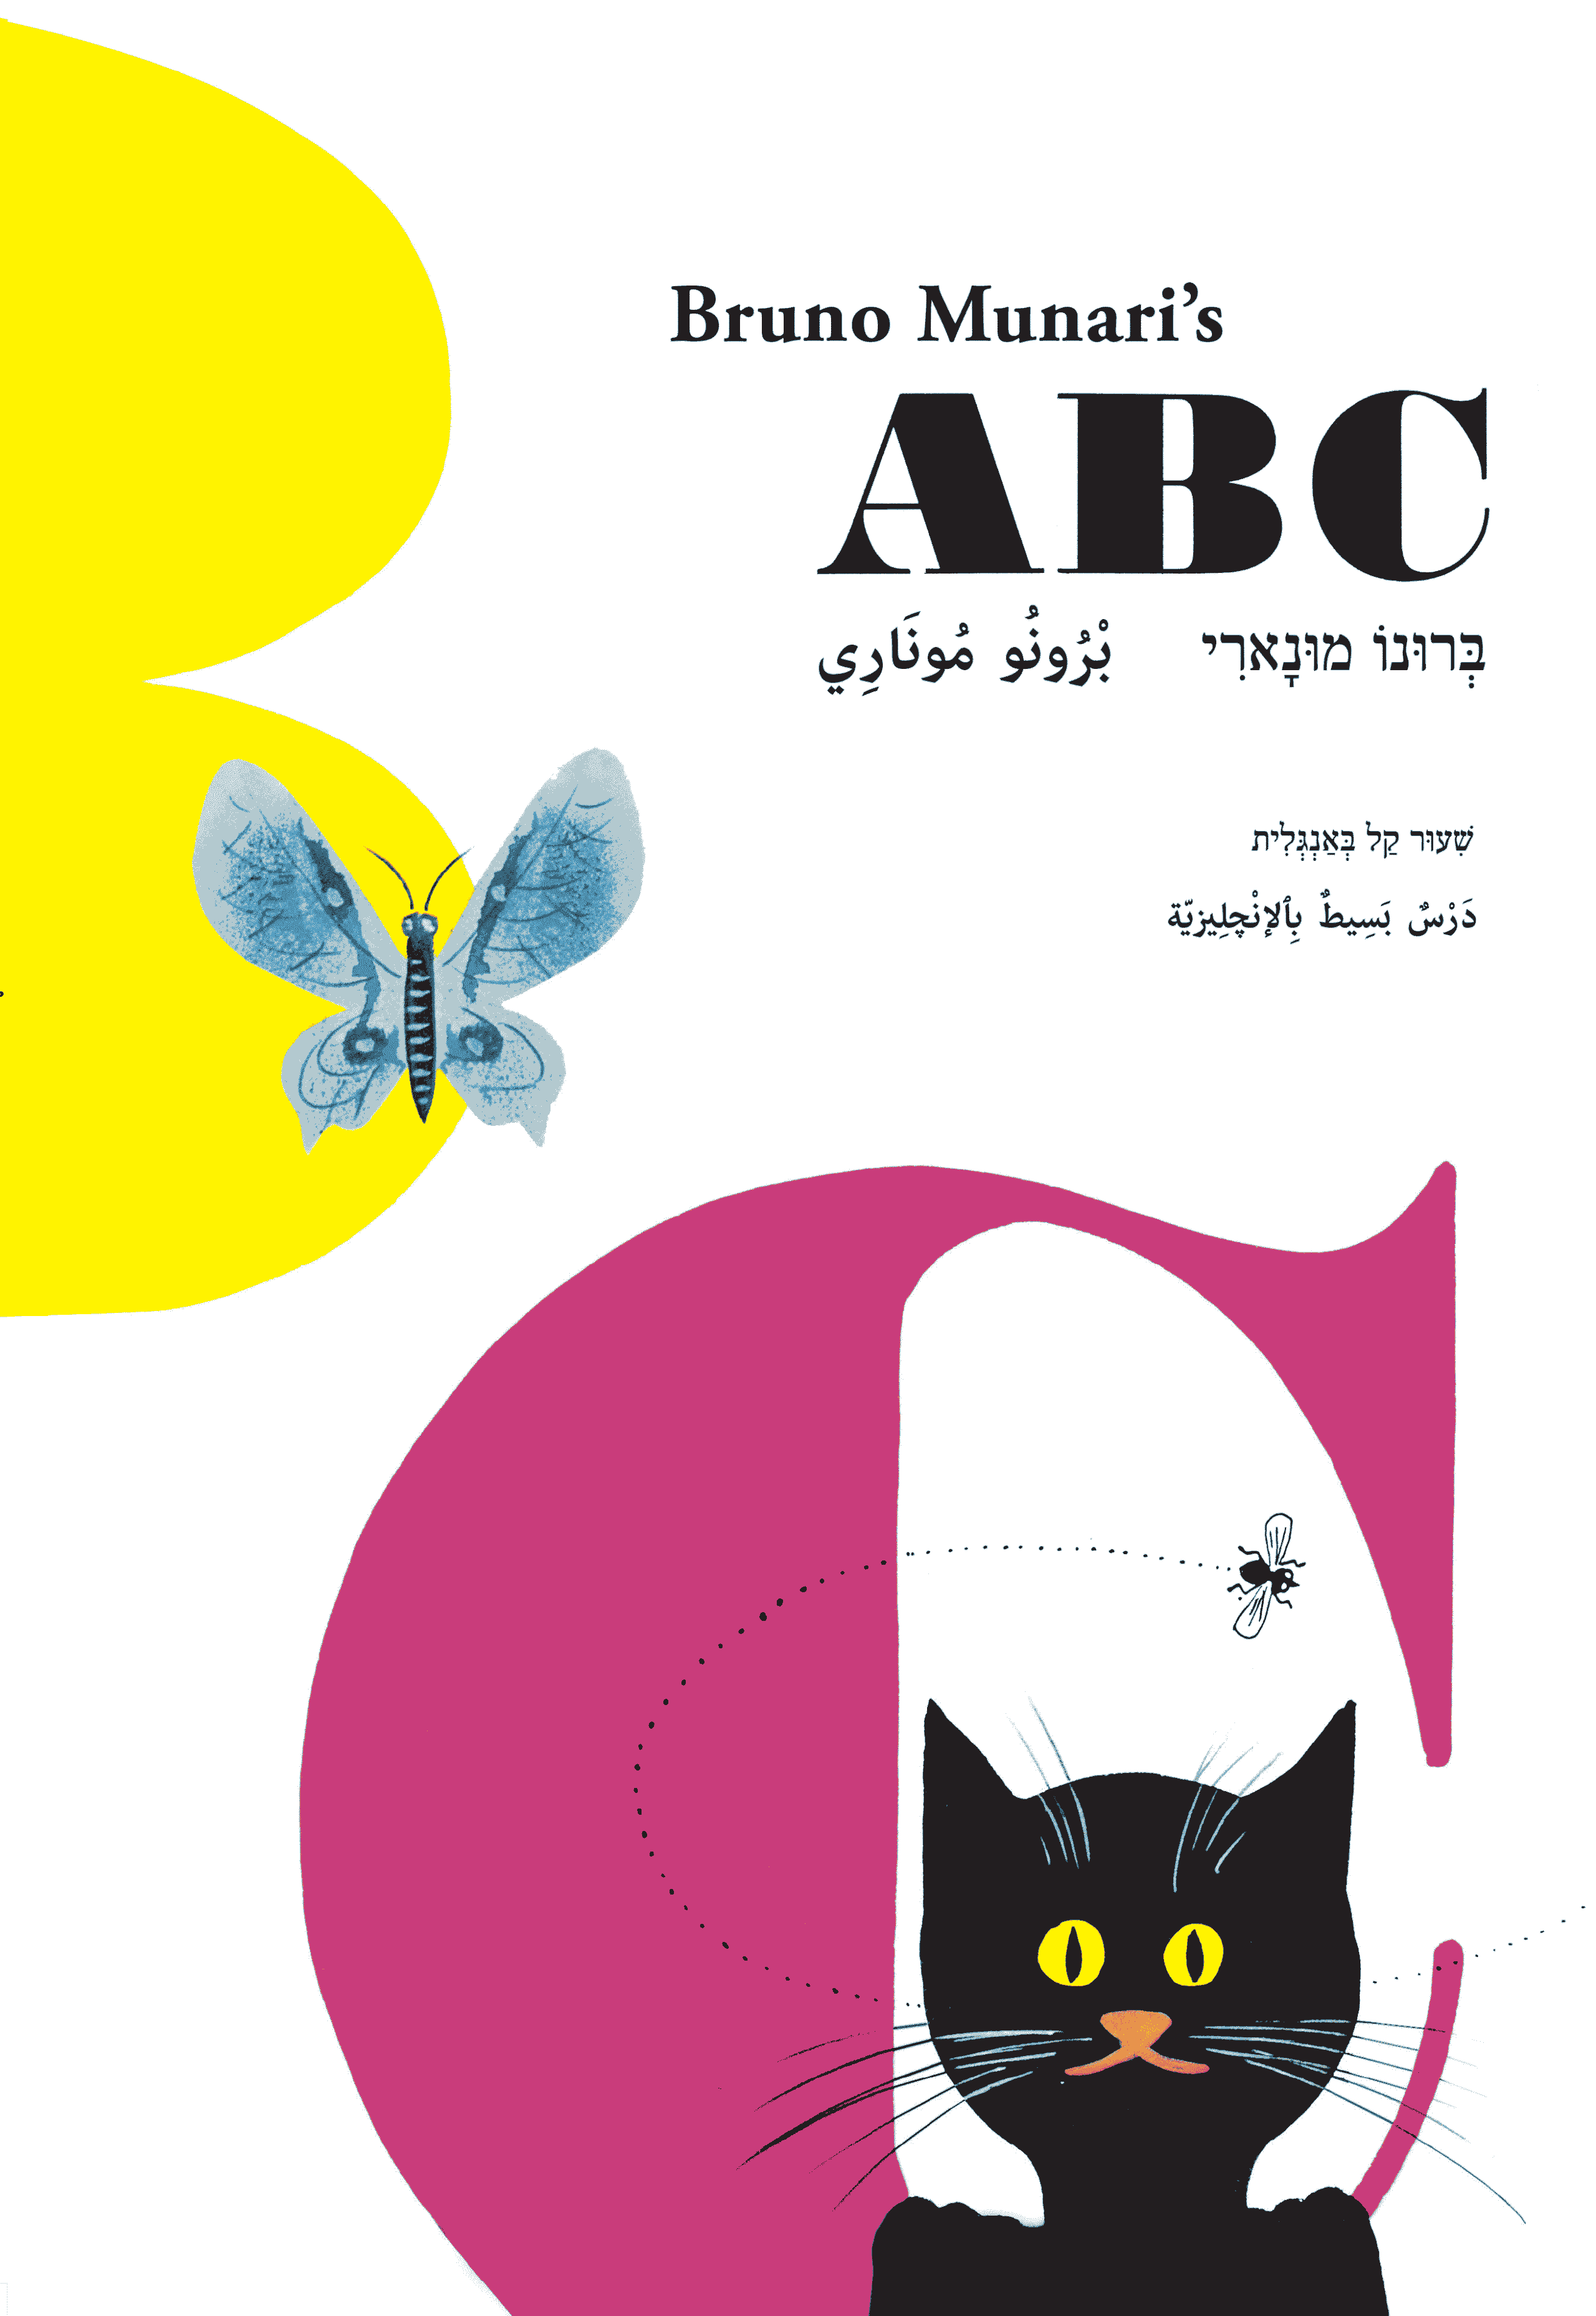 ABC
A simple English Lesson